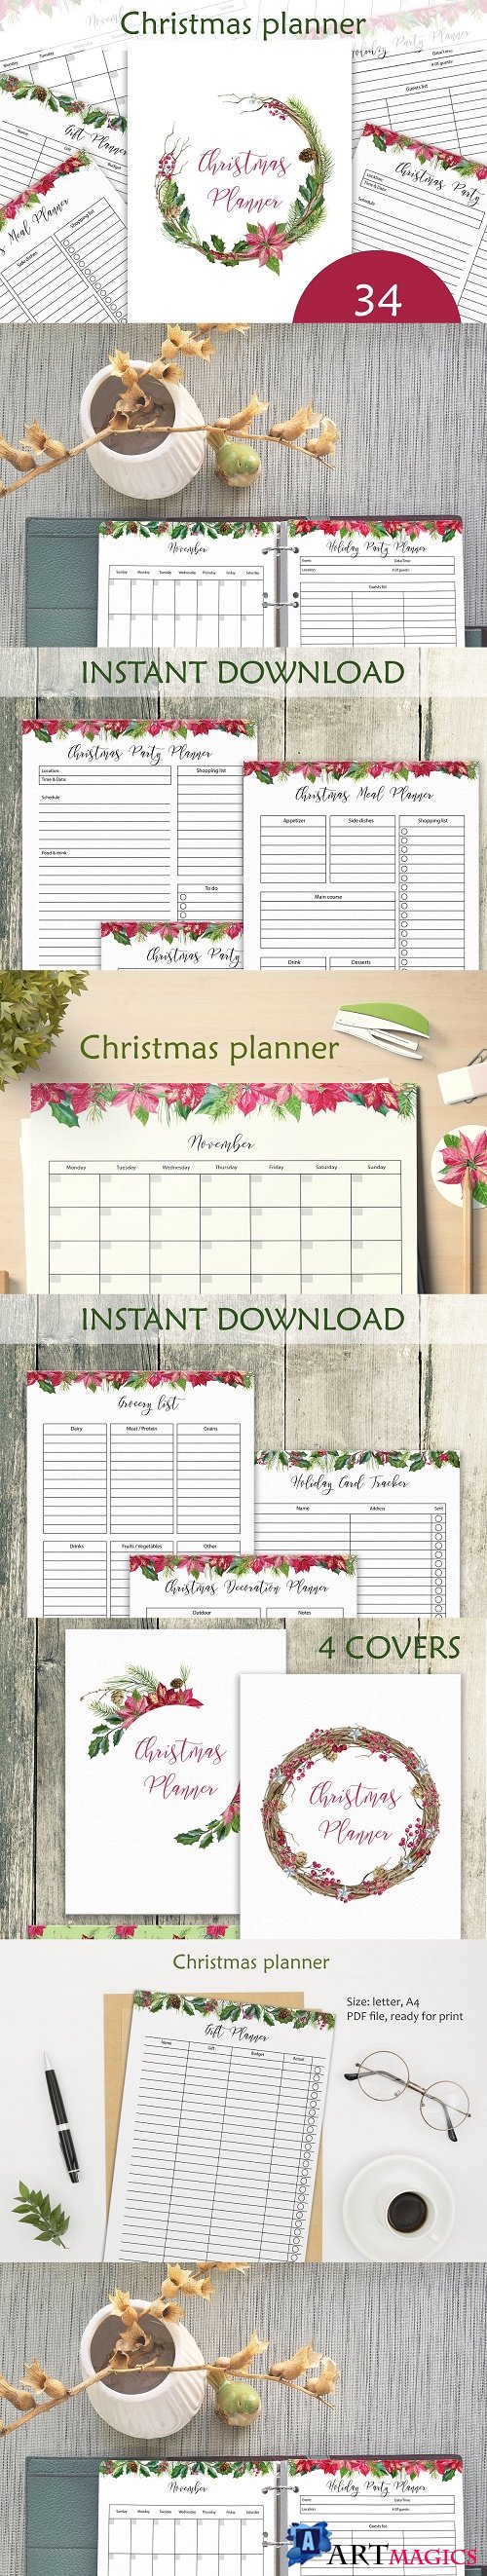 Christmas planner Letter size PDF - 4246032